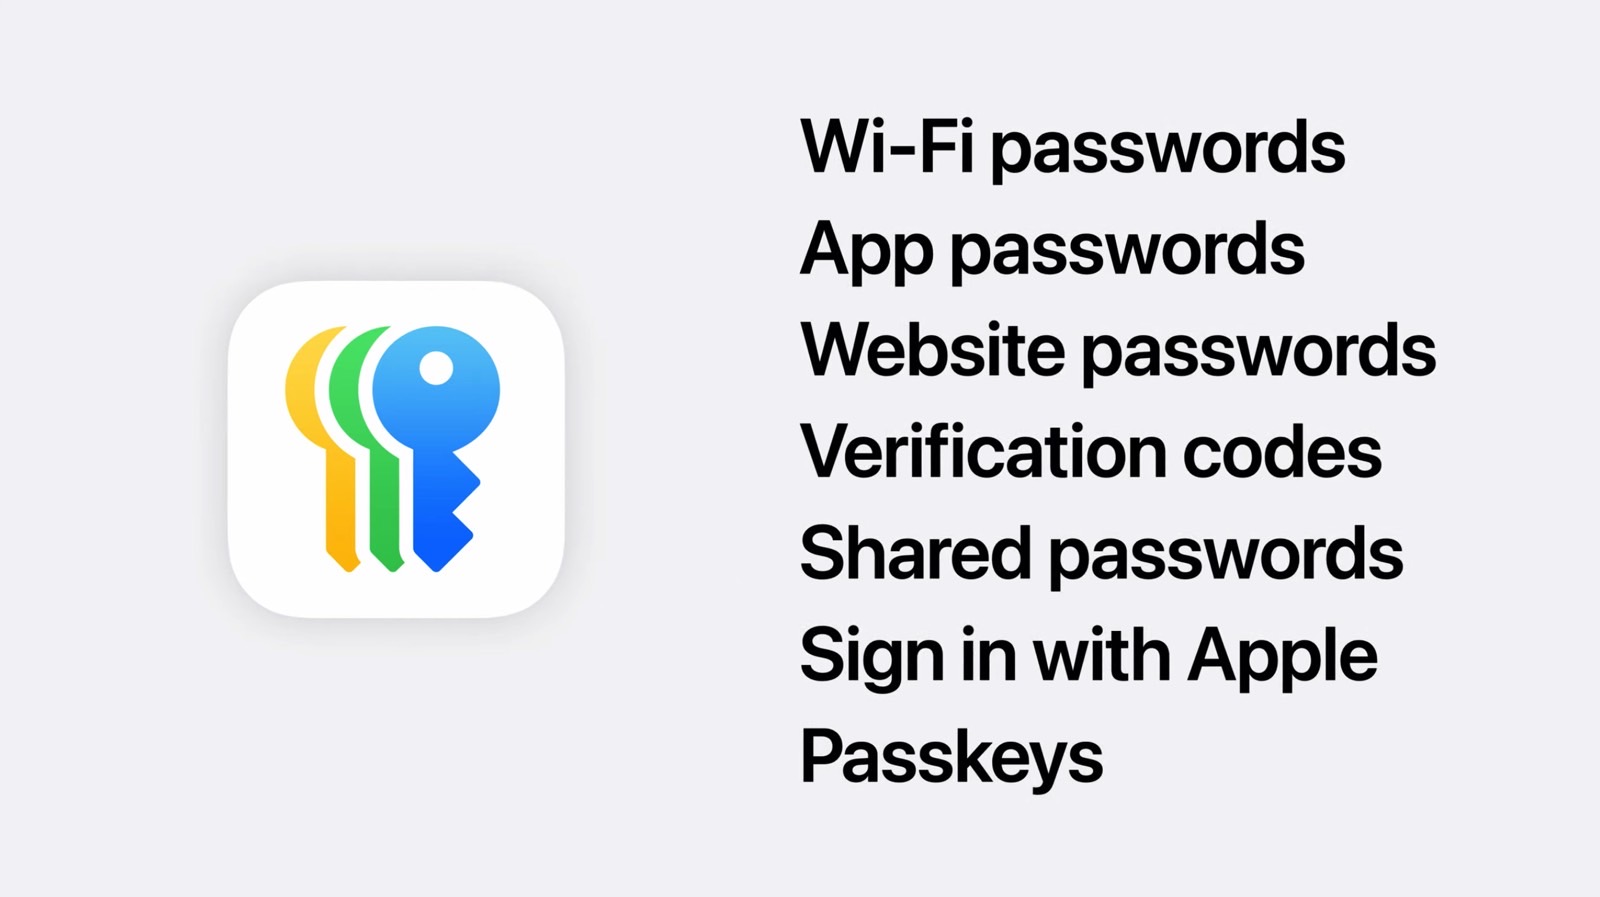 Passwords app for iOS 18, macOS Sequoia and iPadOS 18